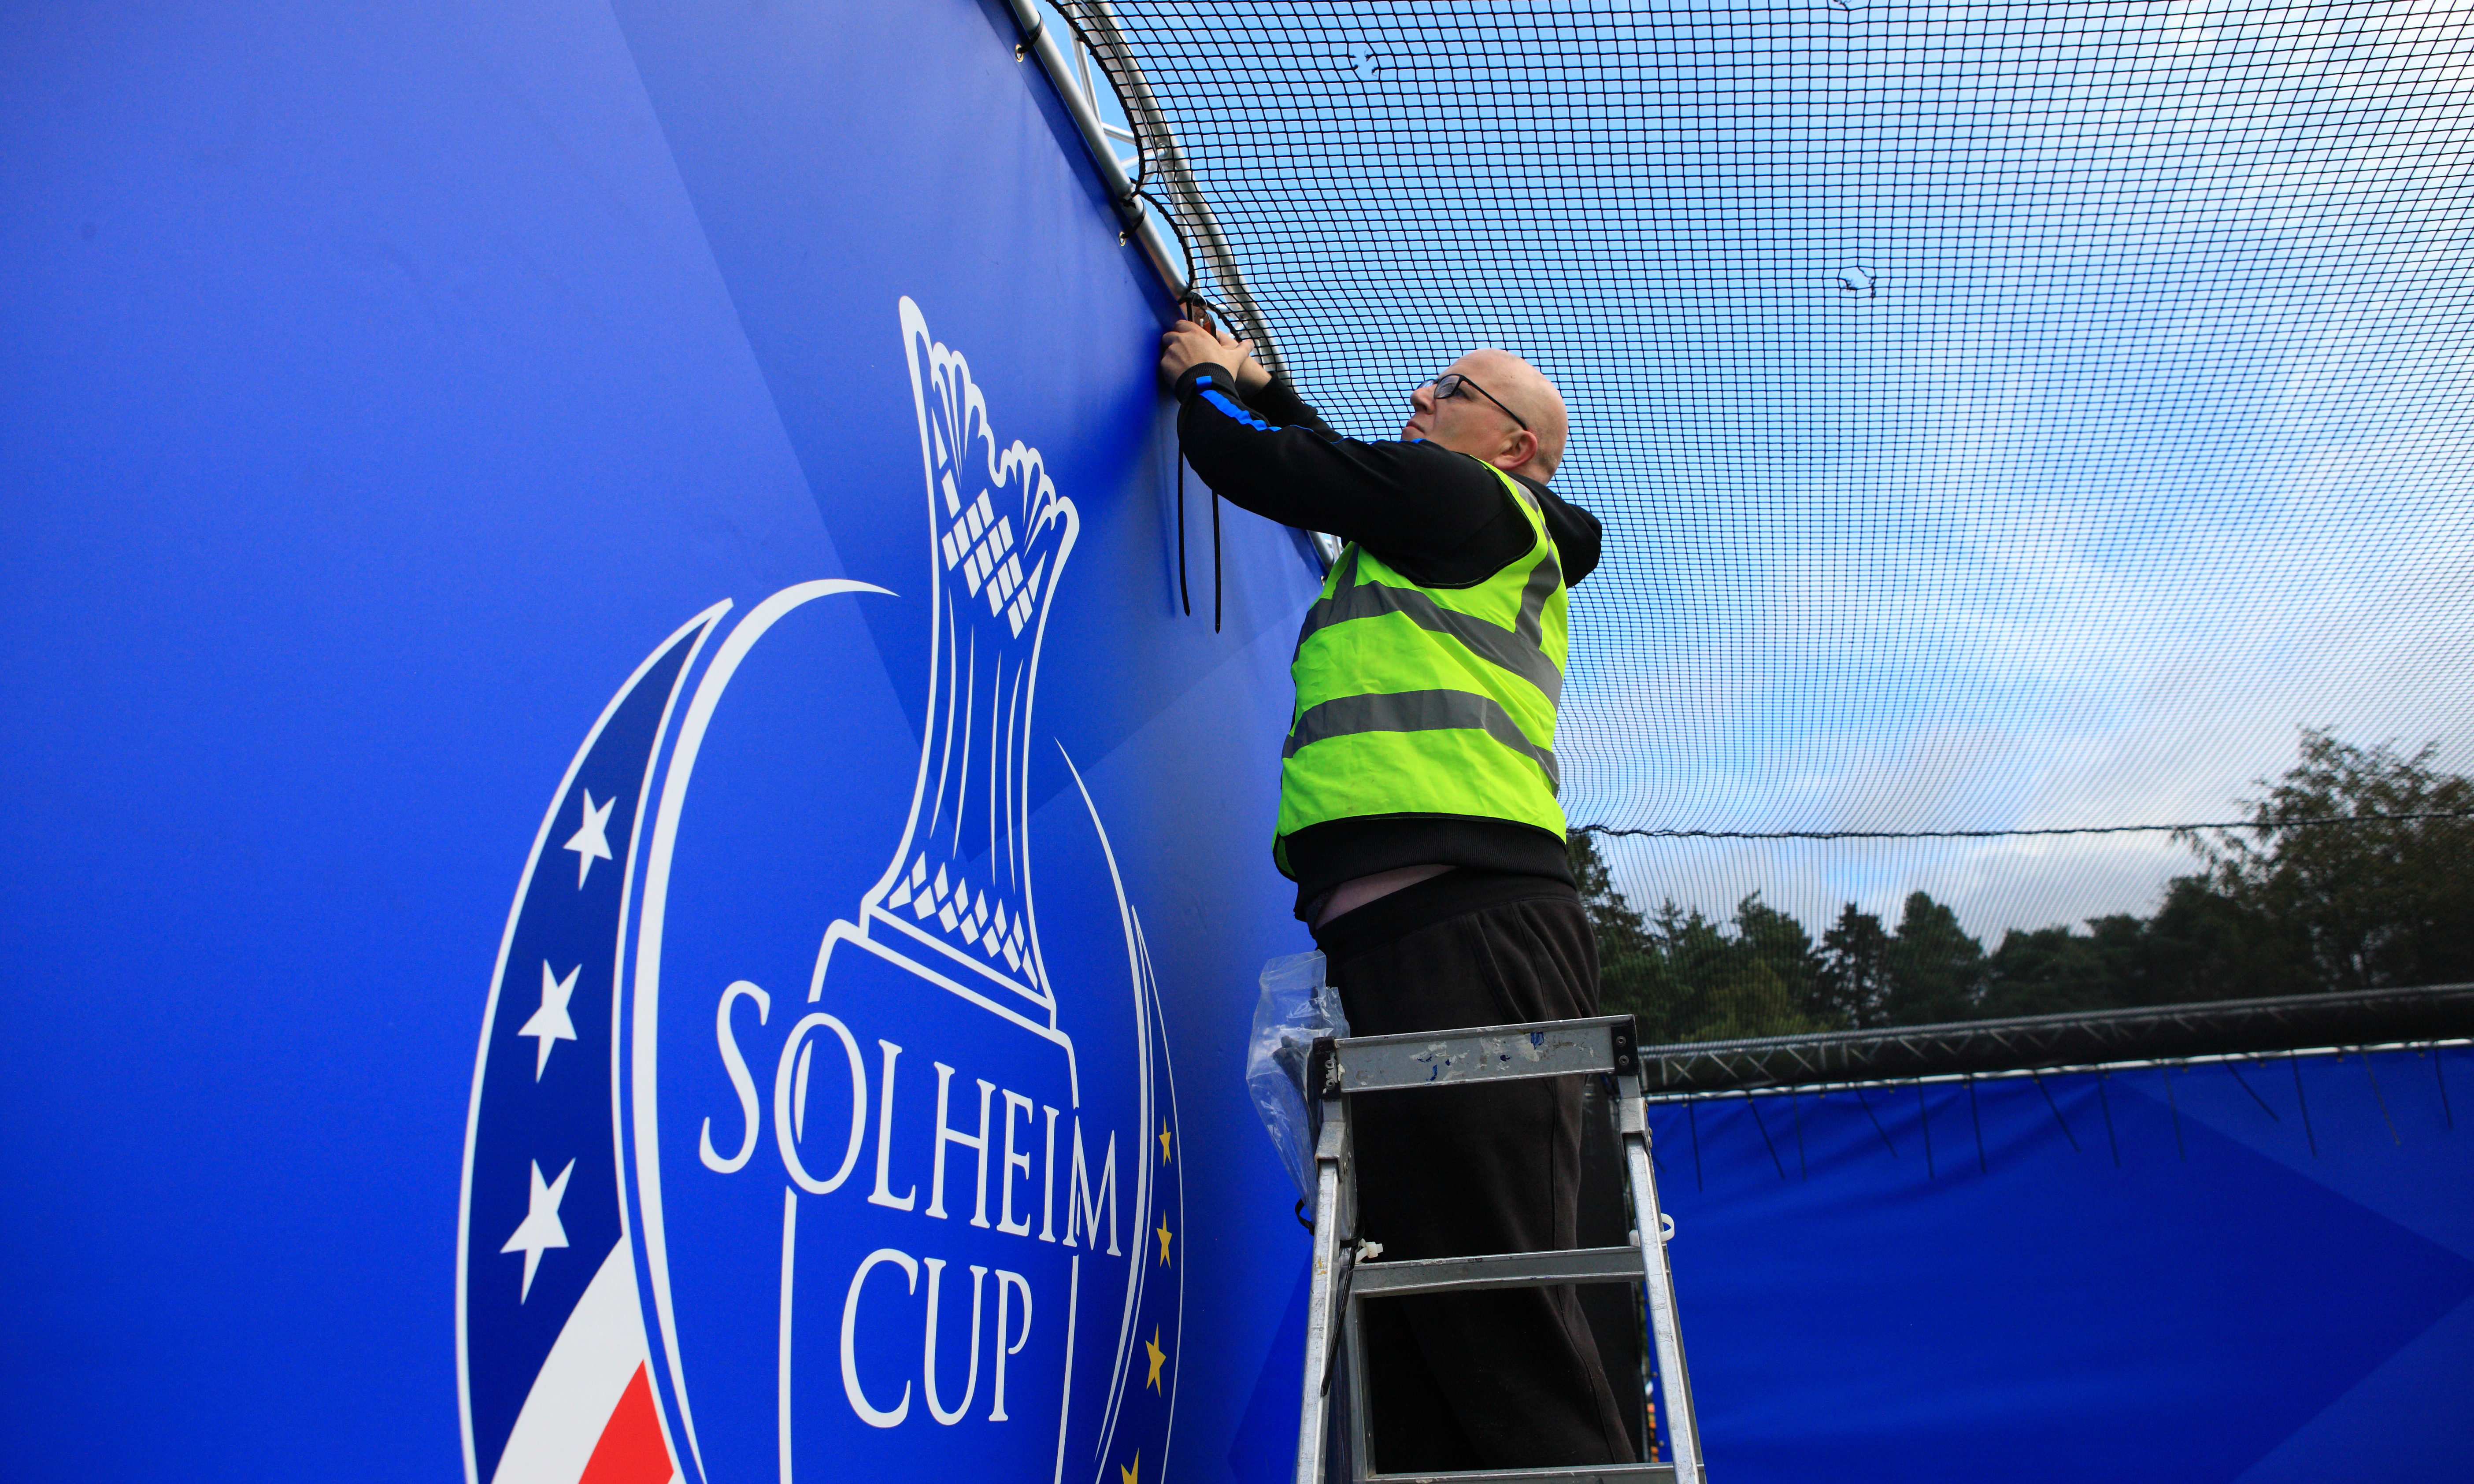 The Solheim Cup is being held at Gleneagles next week.